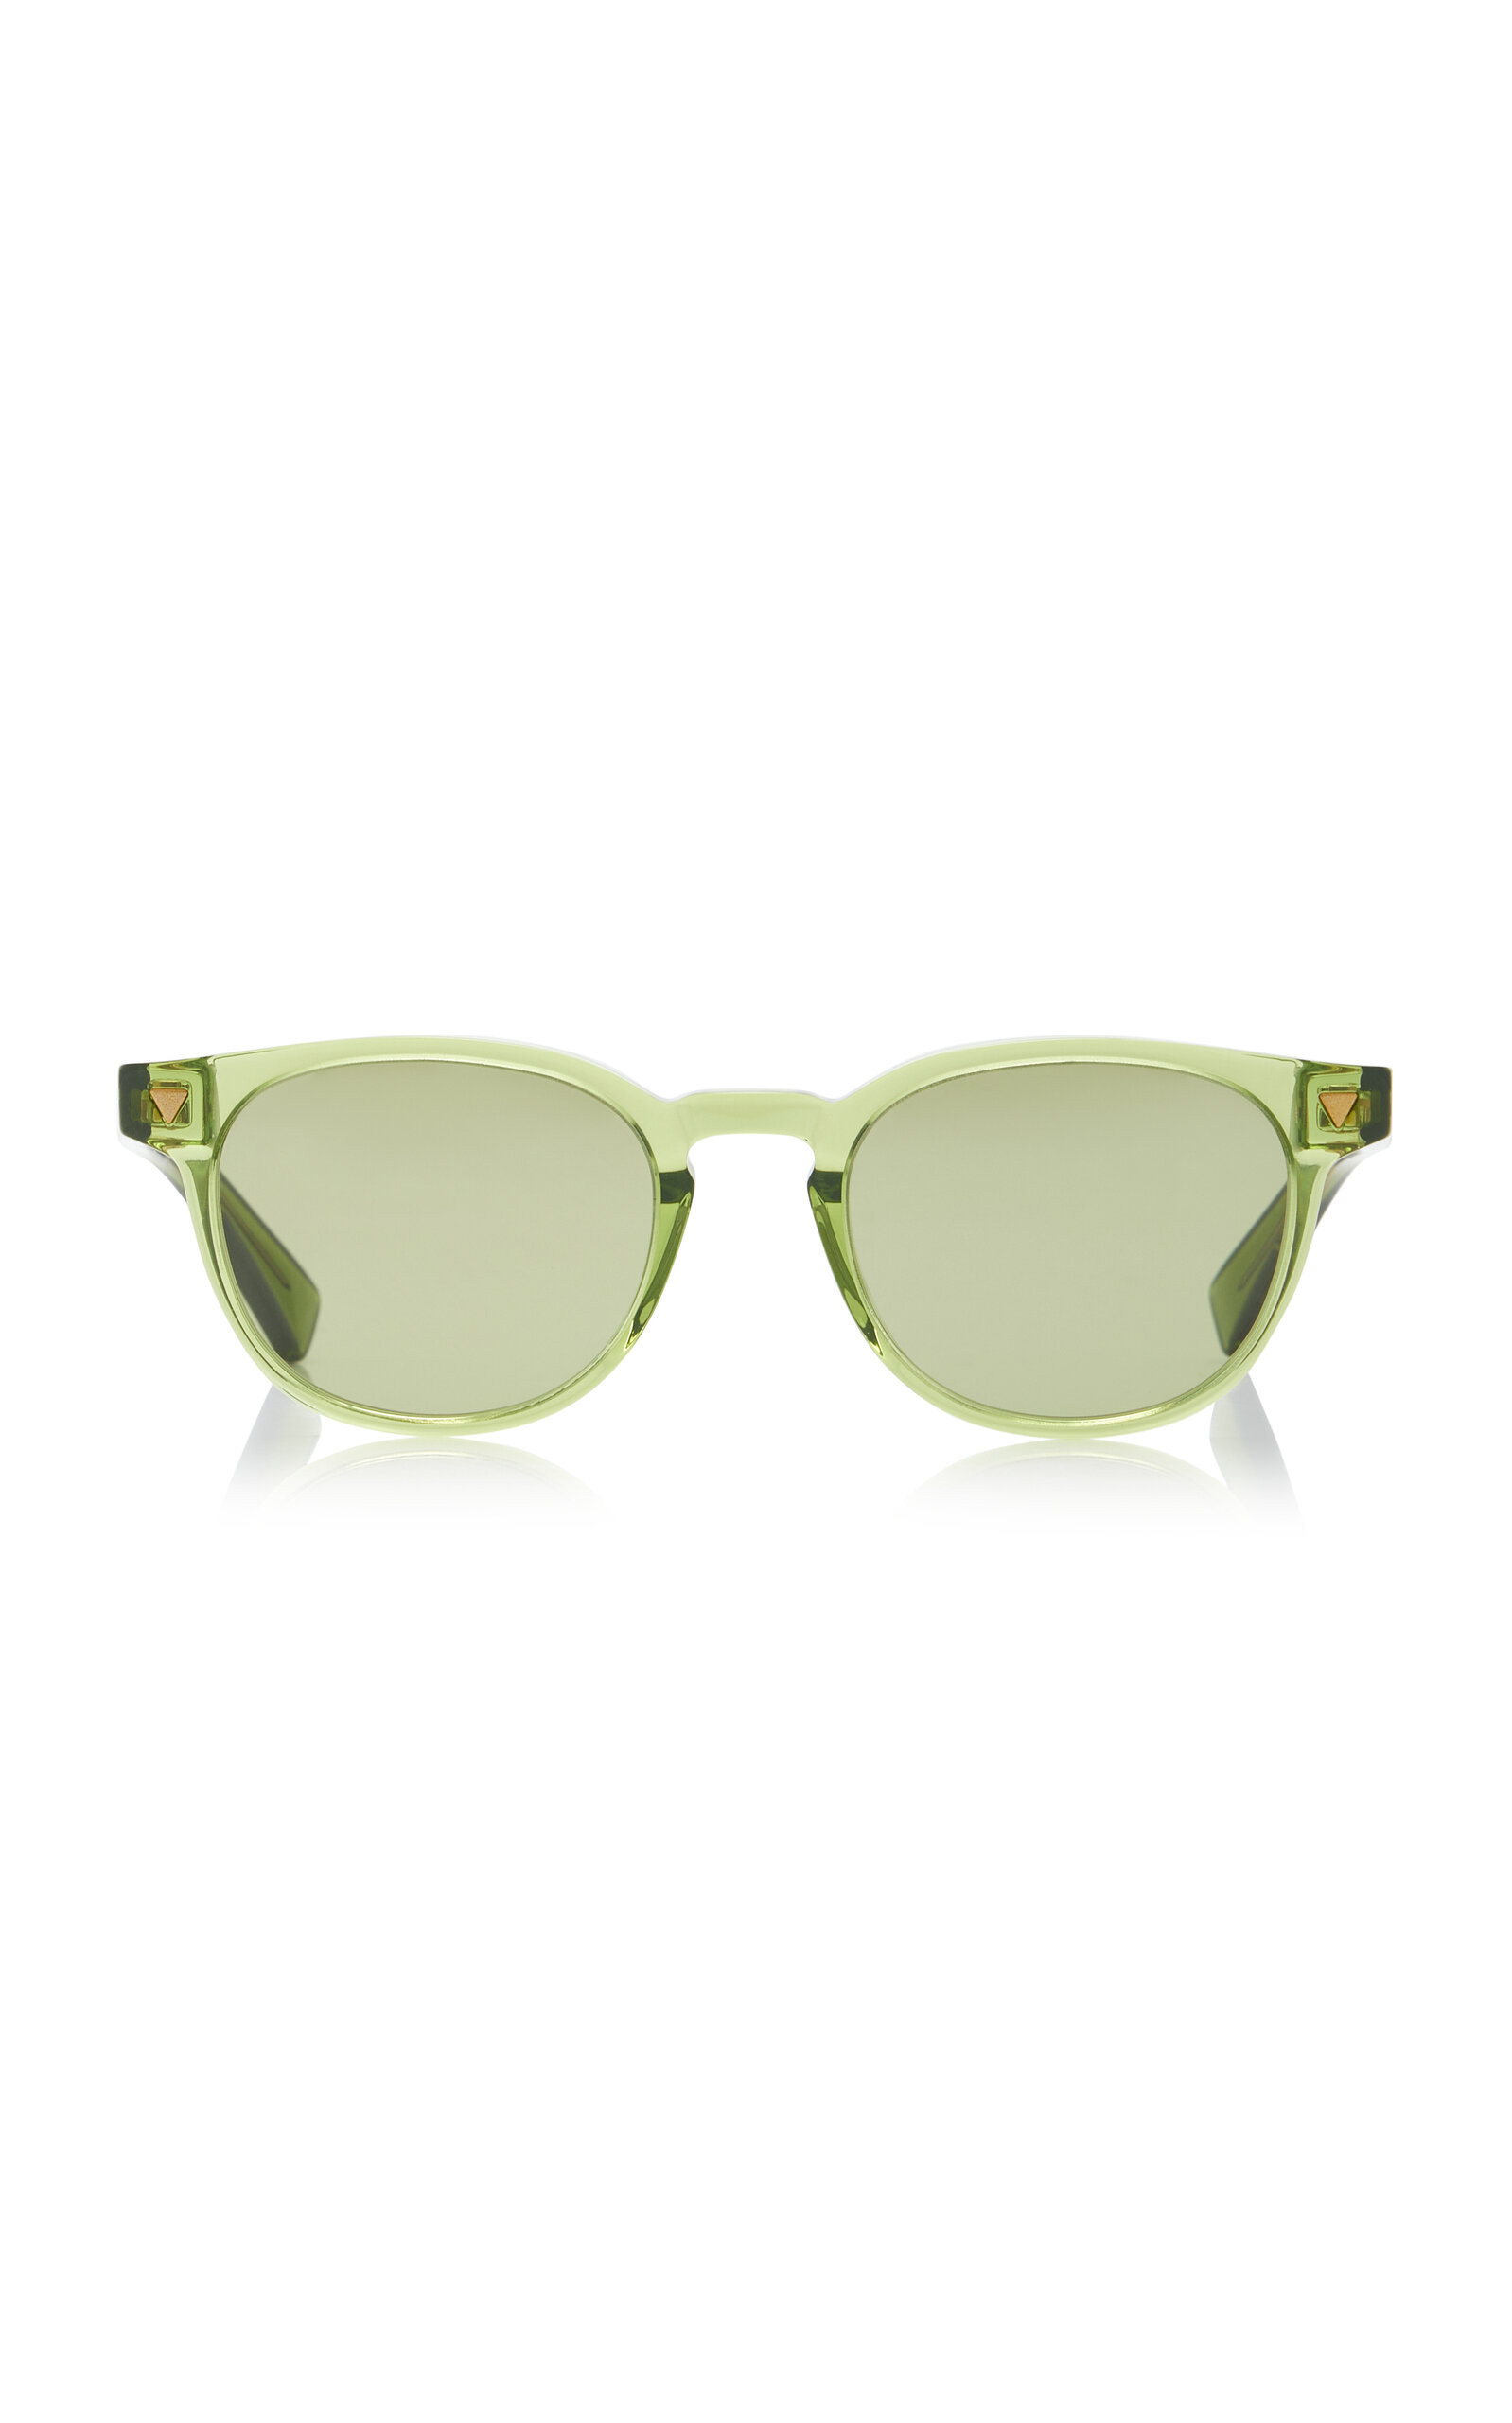 Bottega Veneta - Panthos Soft Round-Frame Acetate Sunglasses - Green - OS - Moda Operandi